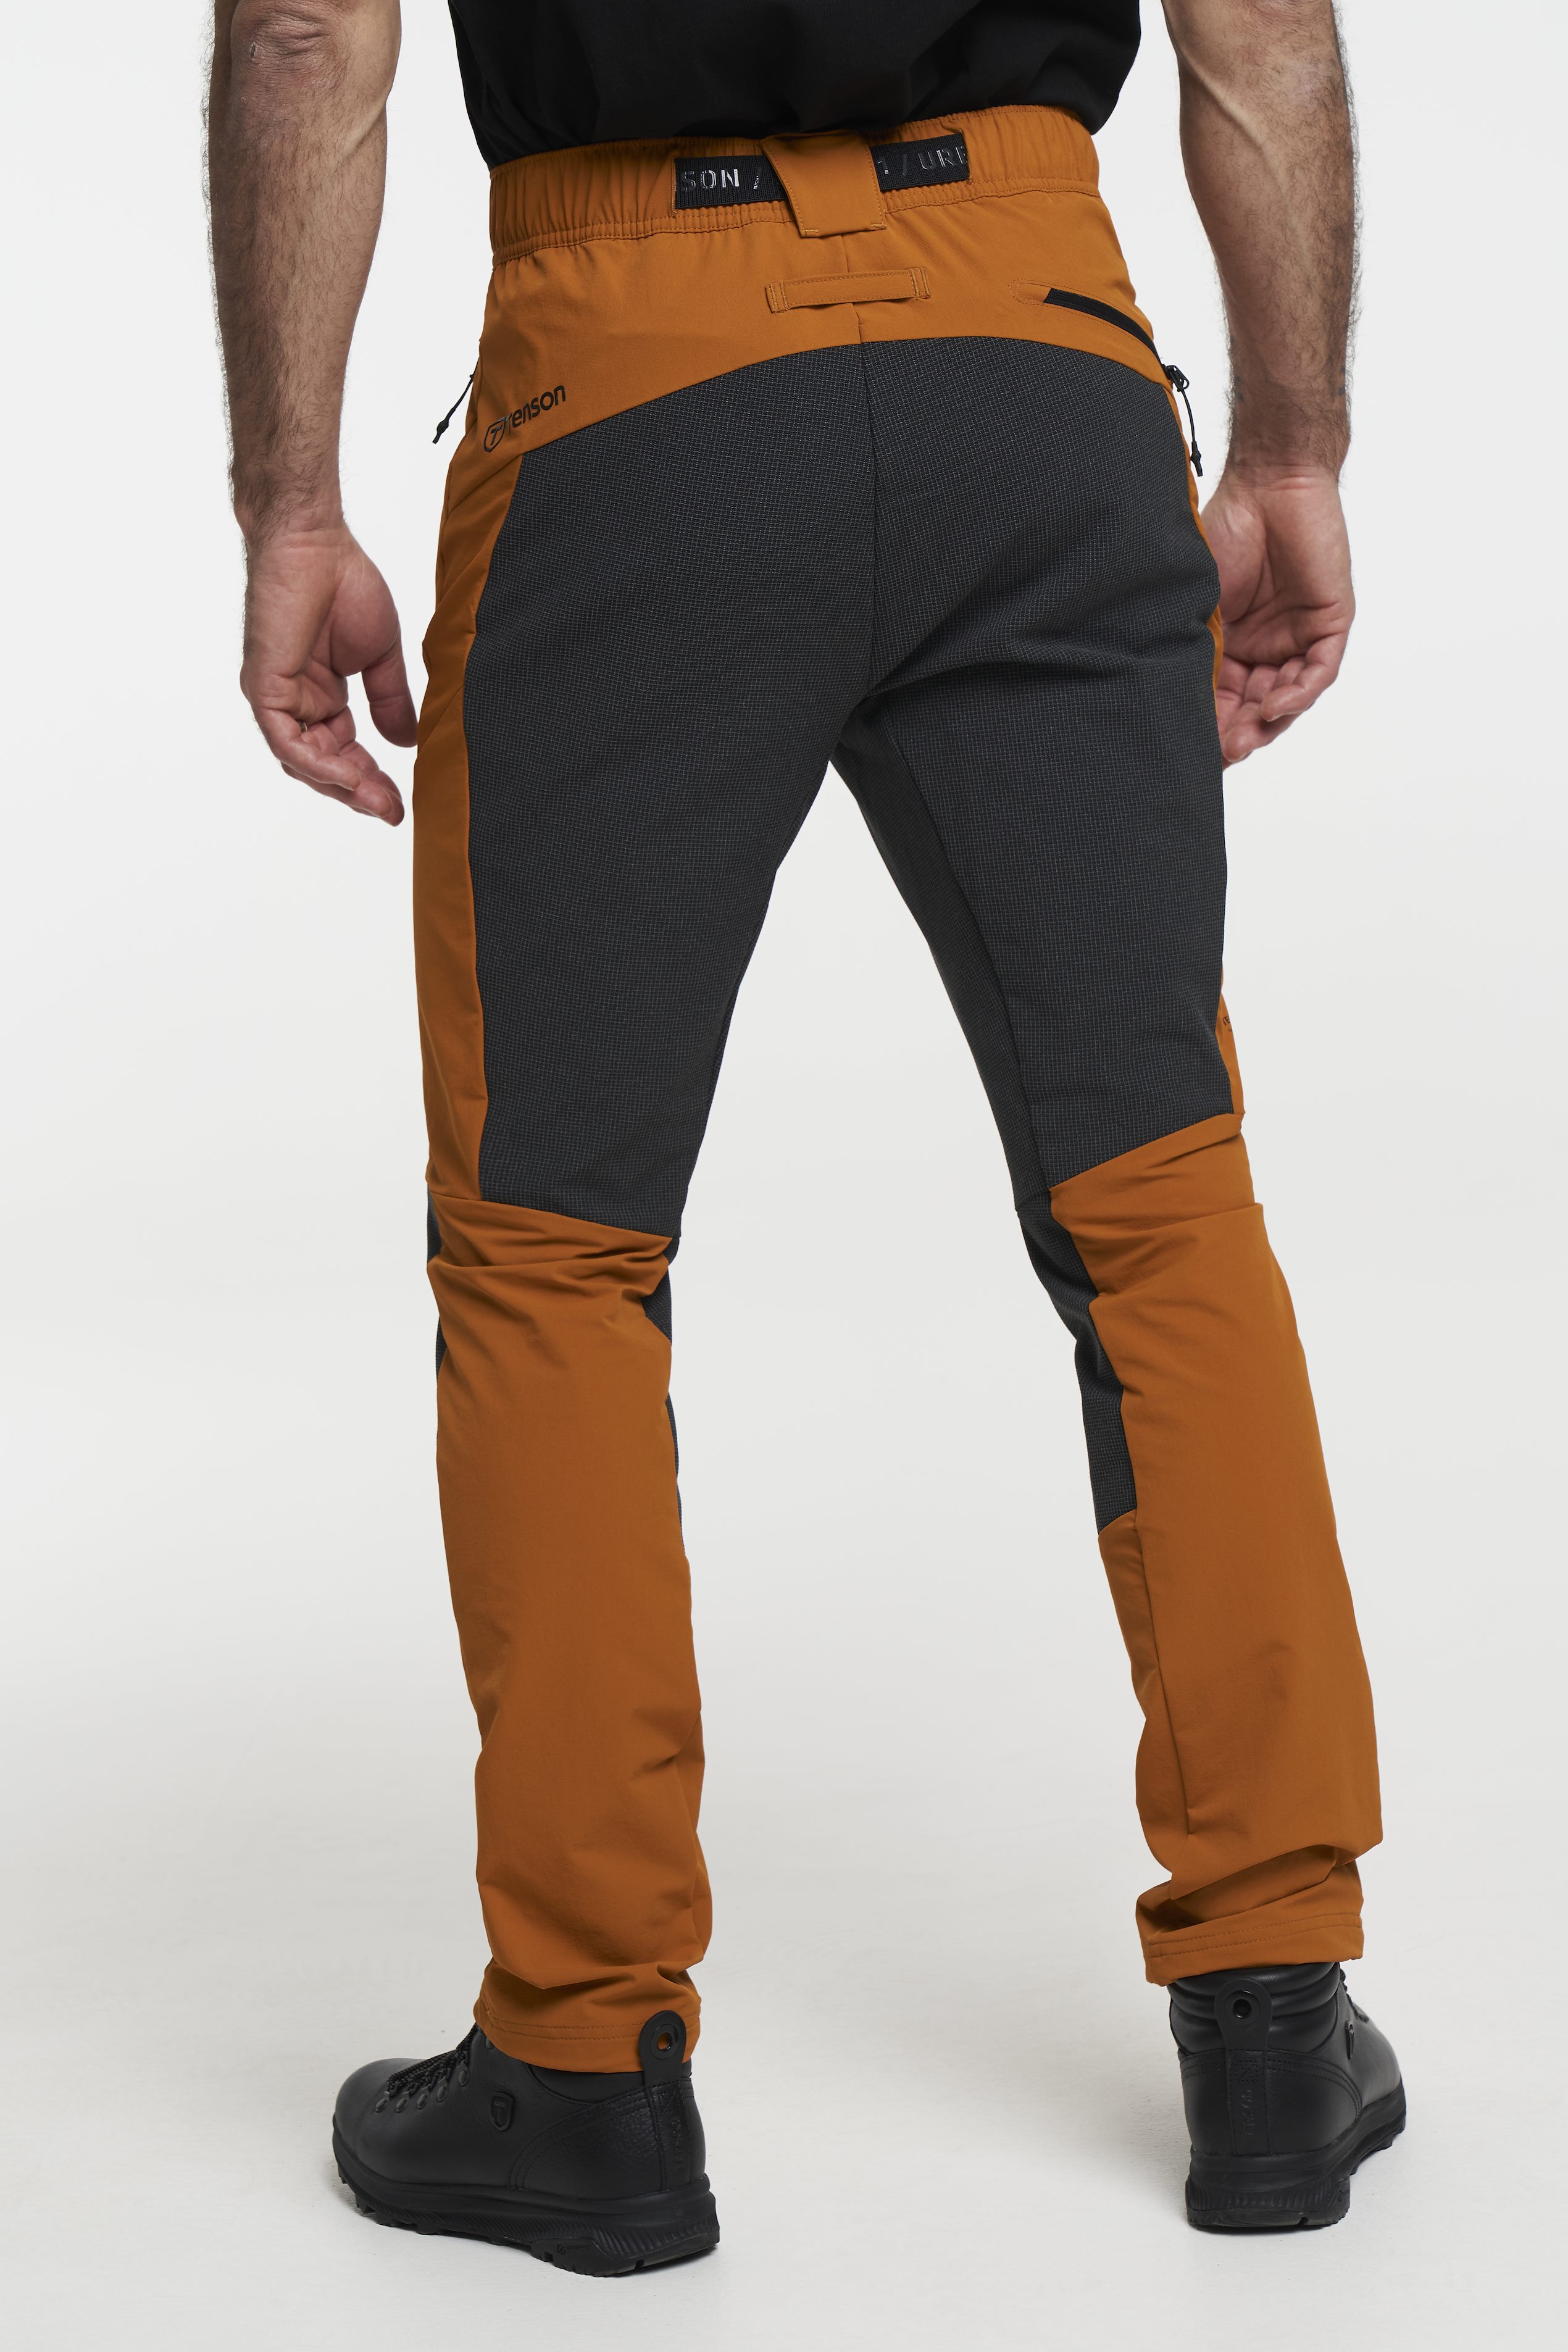 ColourWear Flight ski pants men Dark orange  SkiWebShopSkiWebShopcom